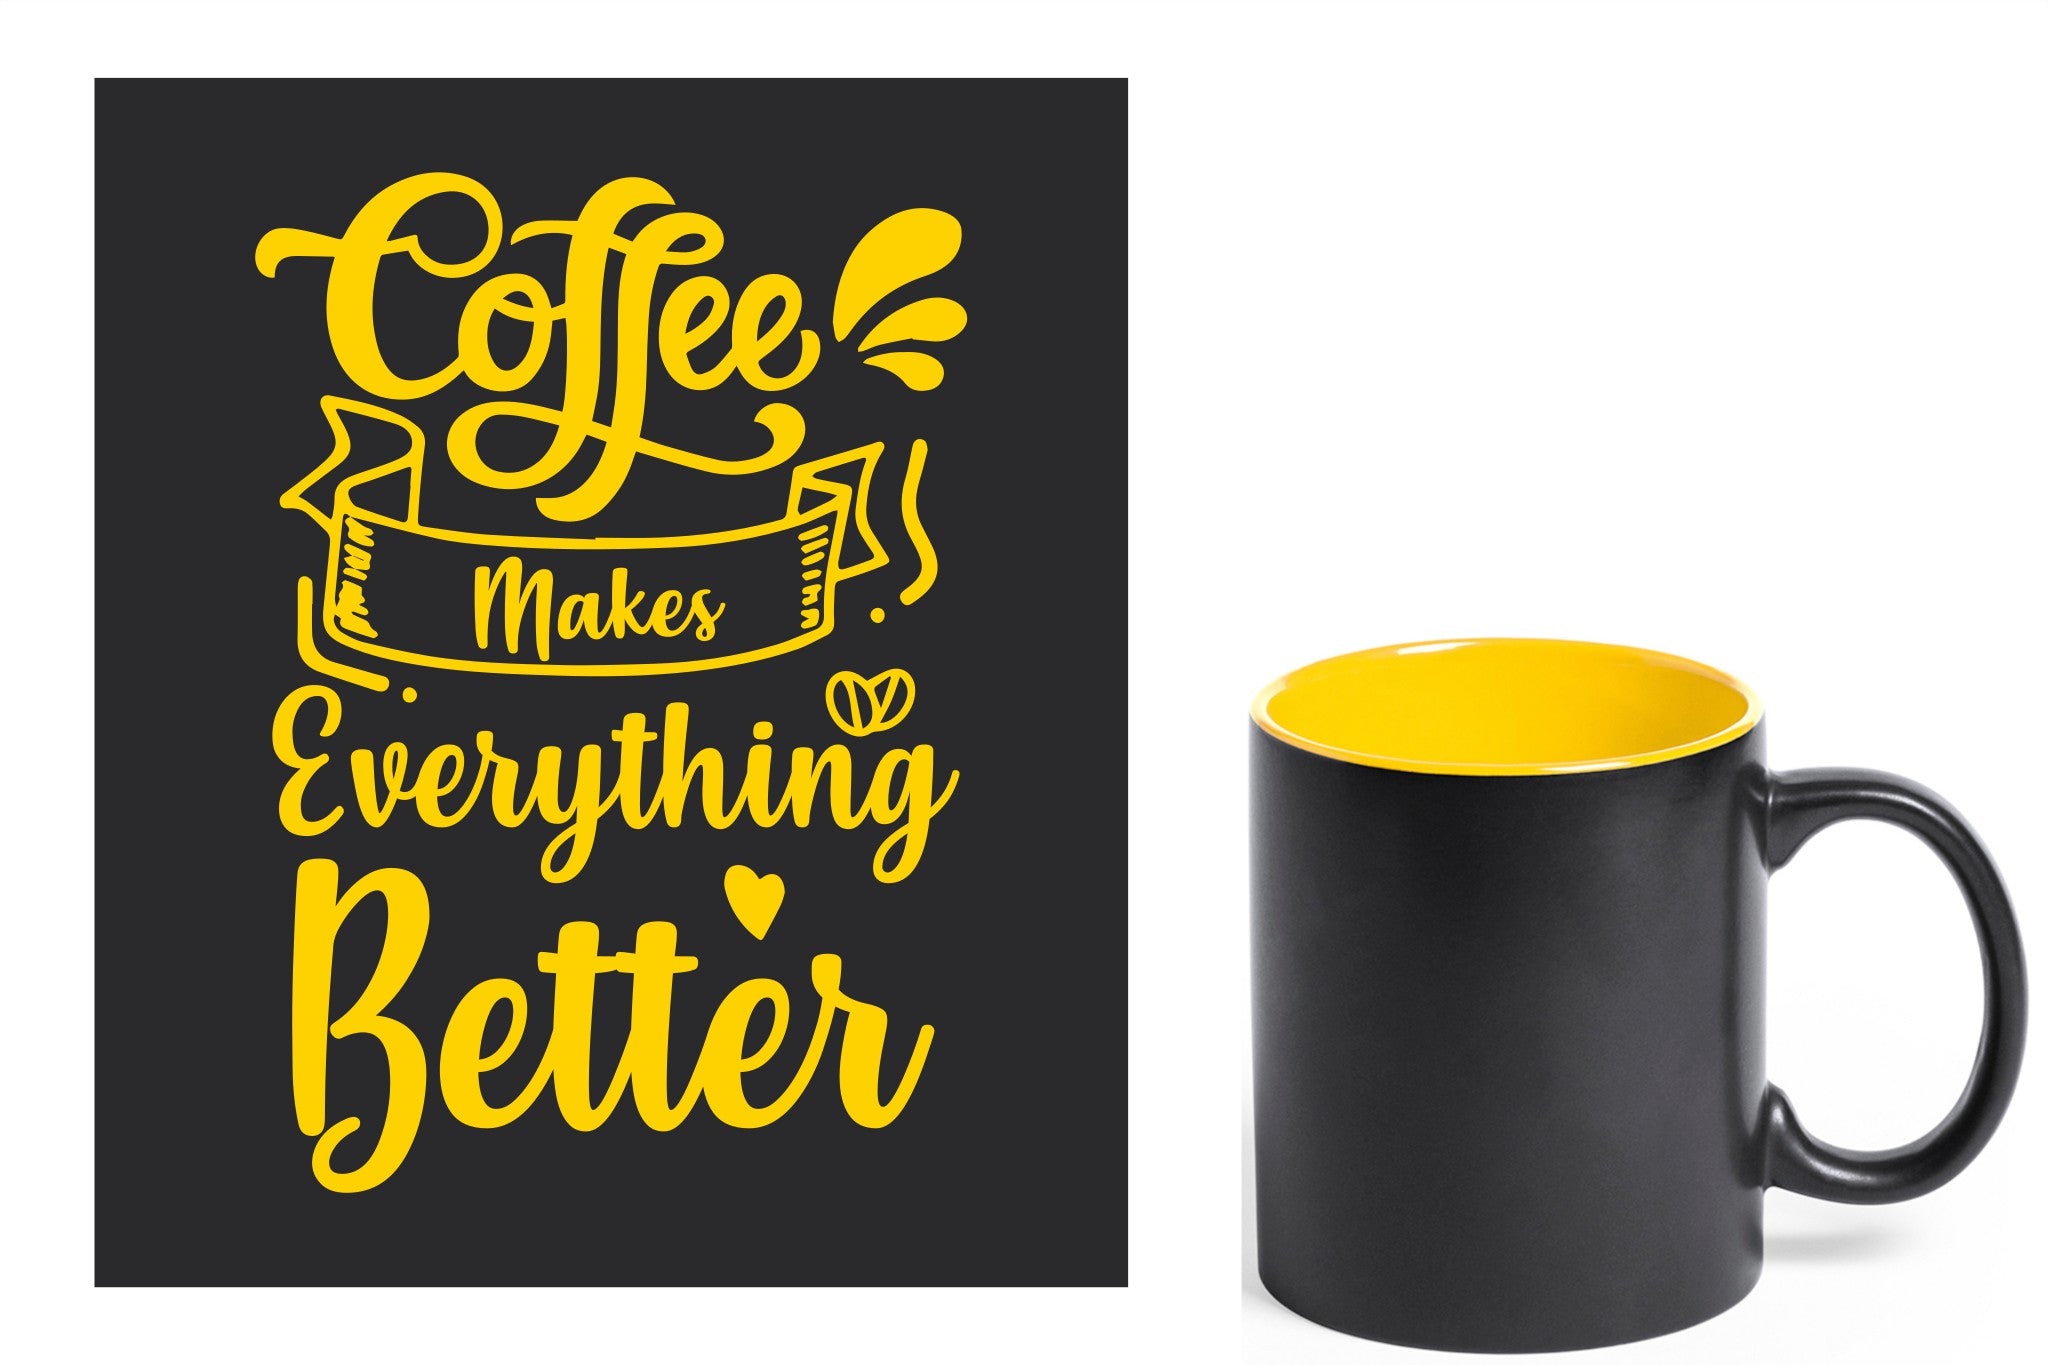 zwarte keramische mok met gele gravure  'Coffee makes everything better'.